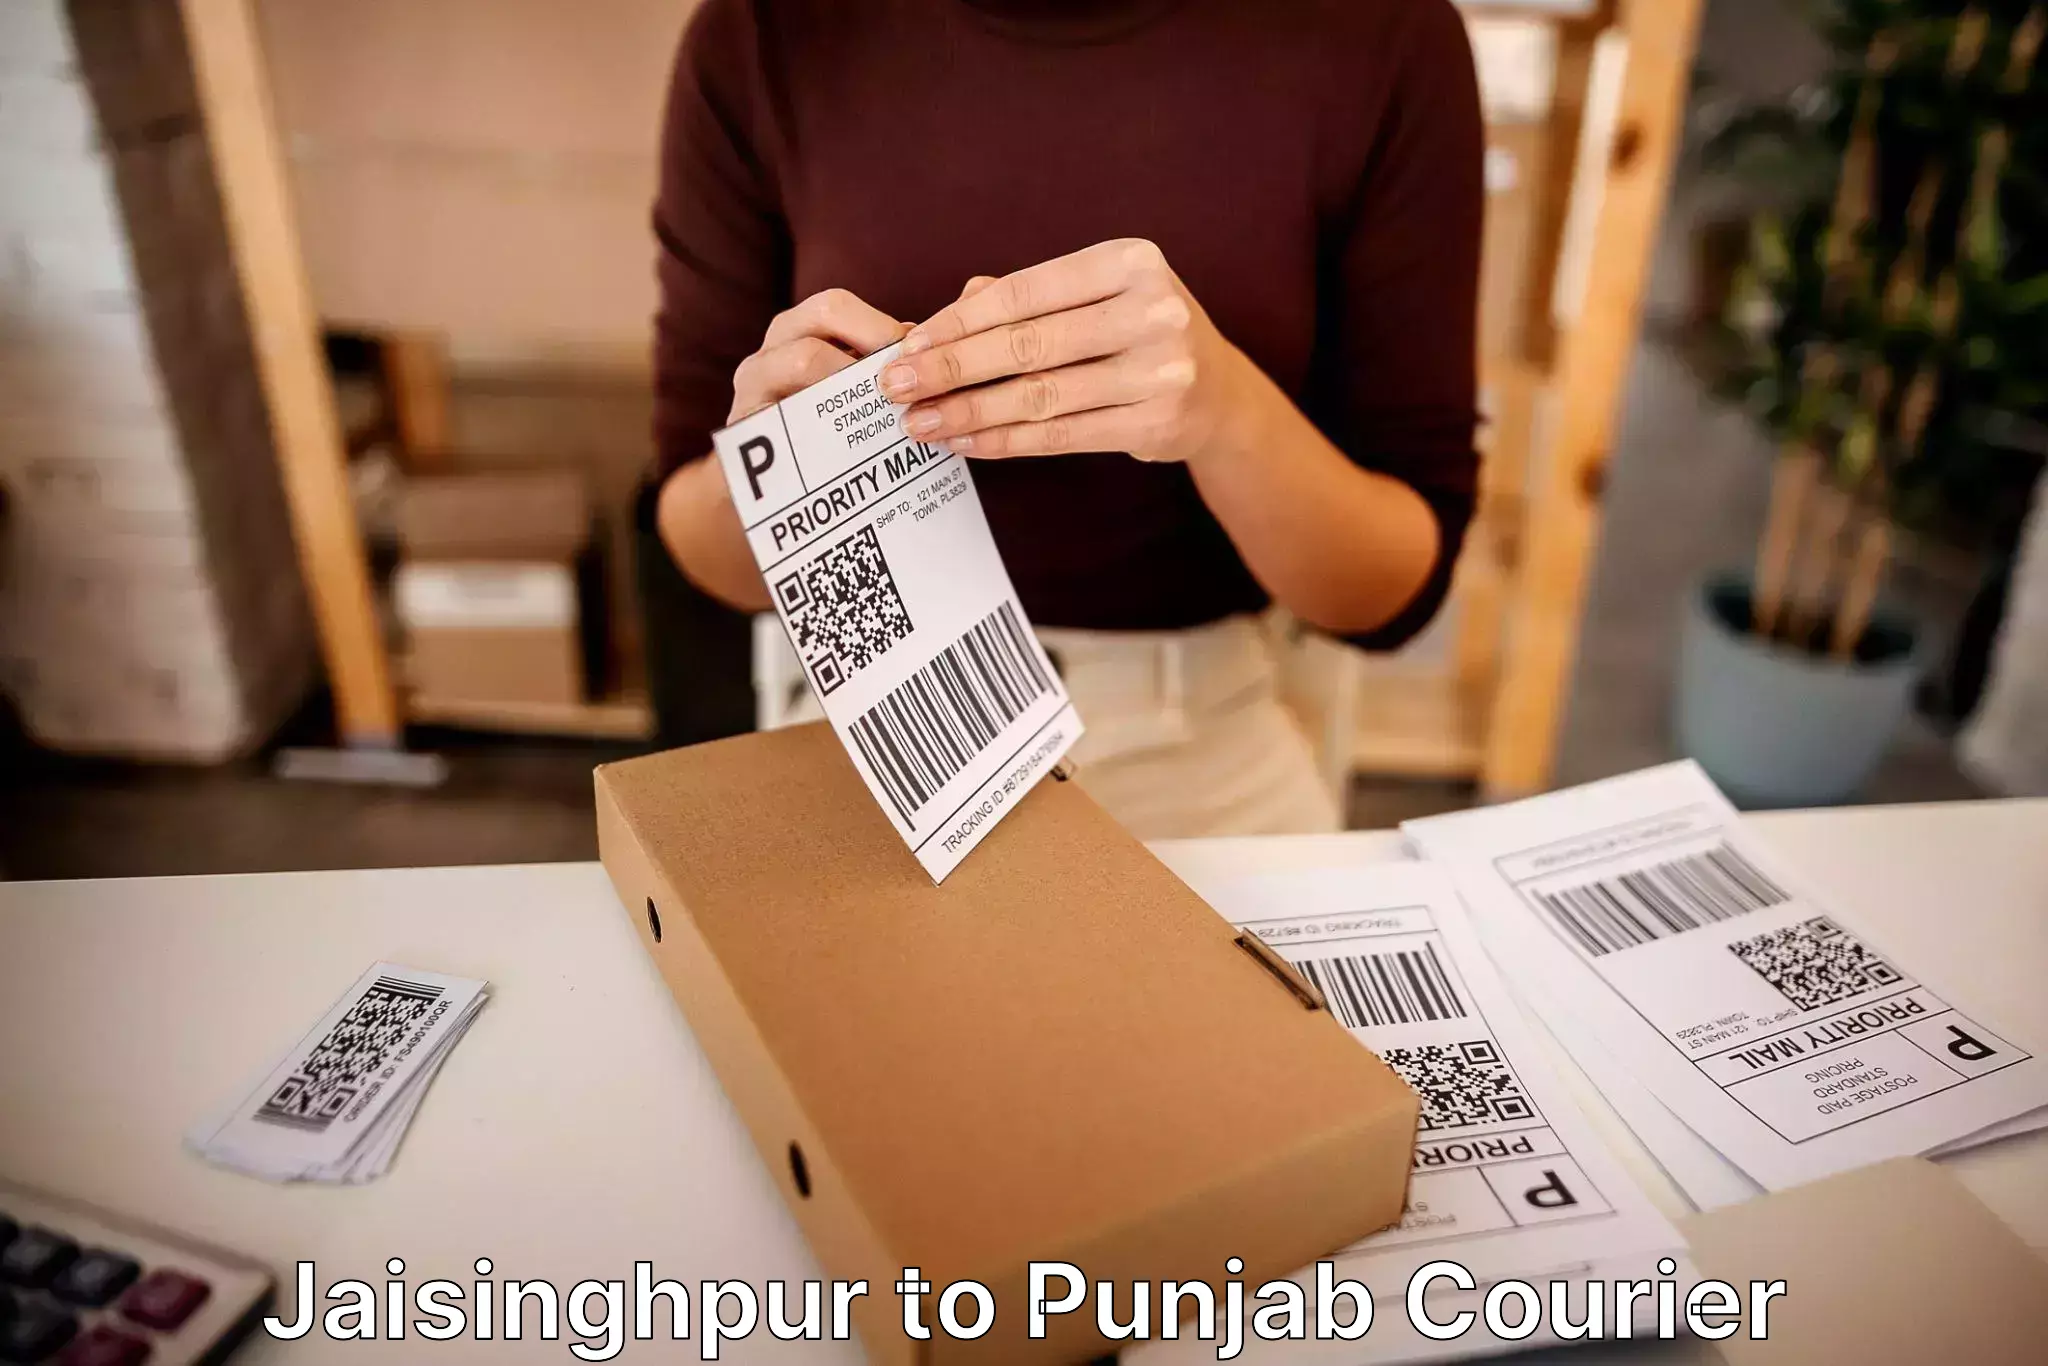 Furniture transport specialists Jaisinghpur to Punjab